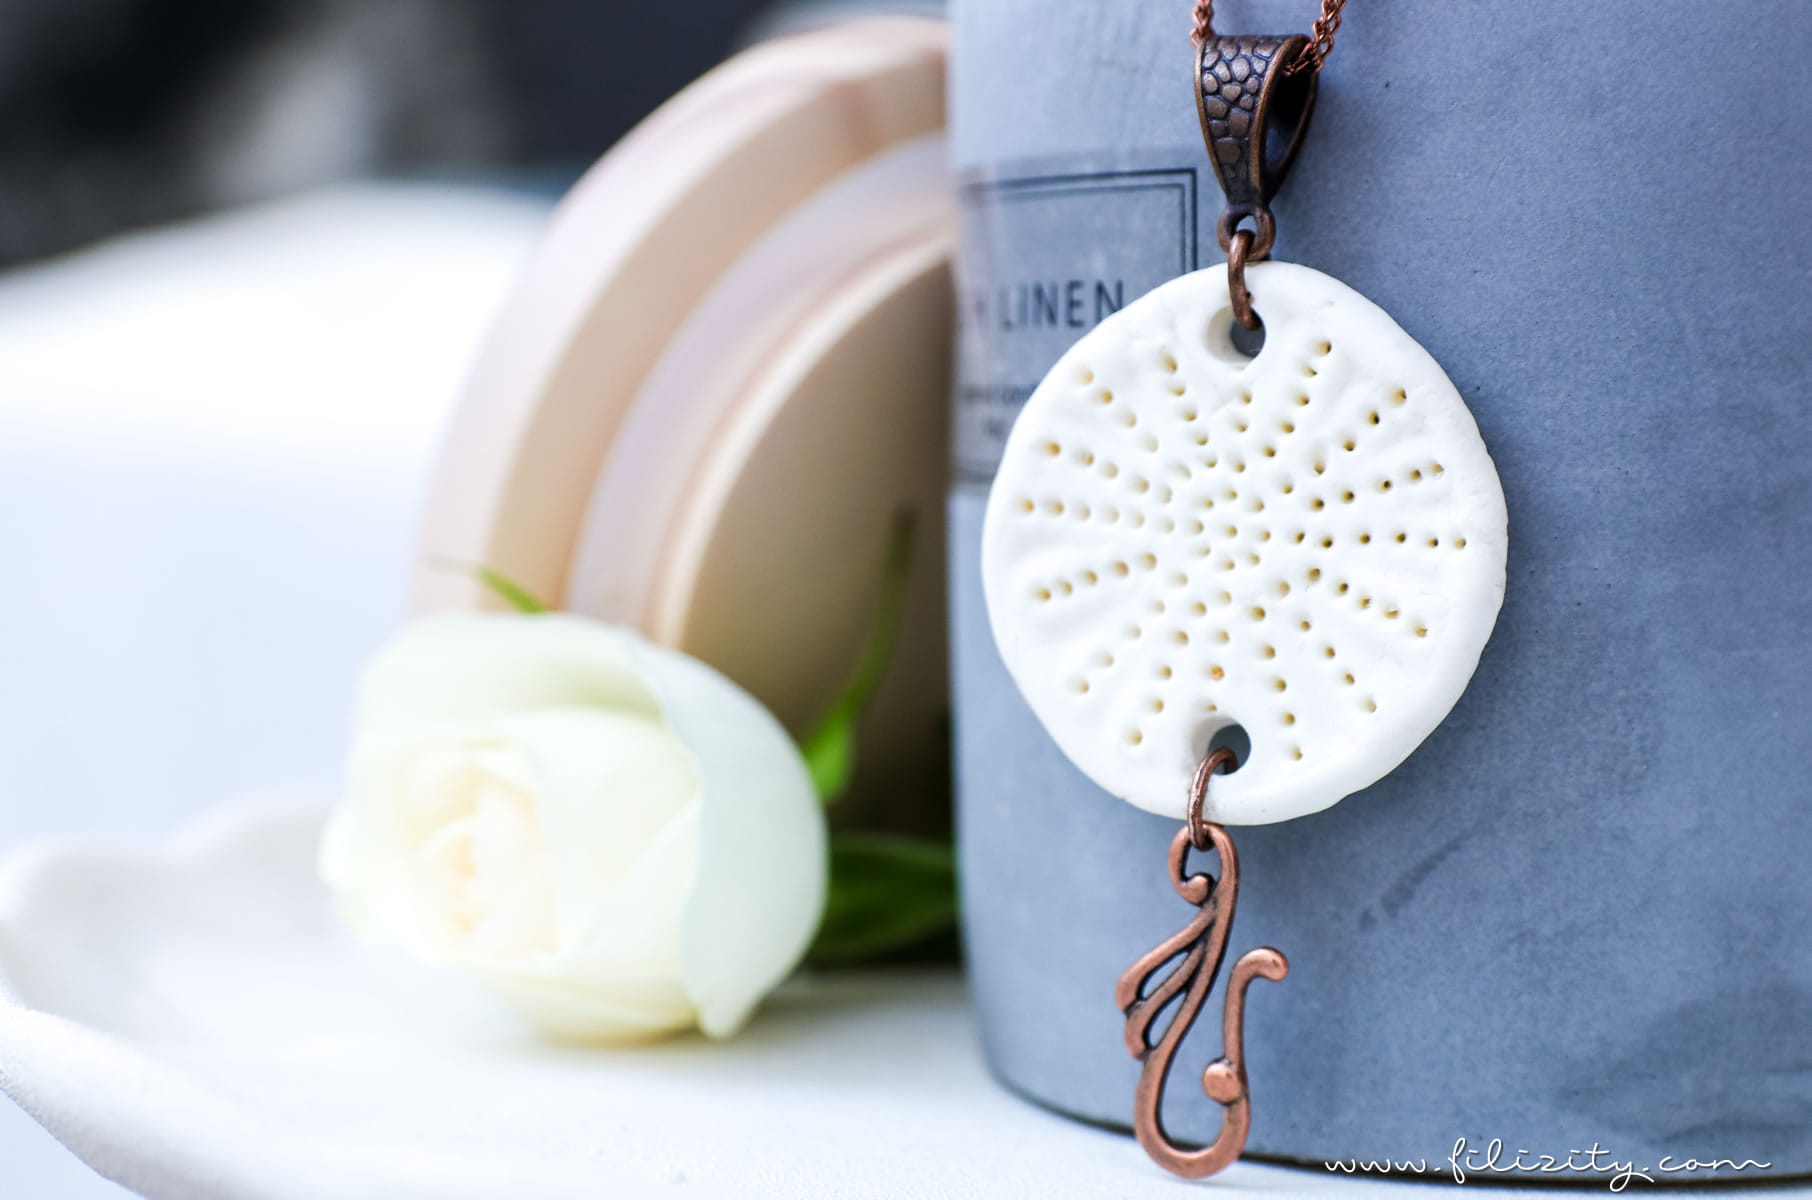 Schmuck selber machen: DIY Halskette mit Katporzellan-Anhänger - perfekt als Geschenkidee | Filizitiy.com | DIY-Blog aus dem Rheinland #kaltporzellan #boho